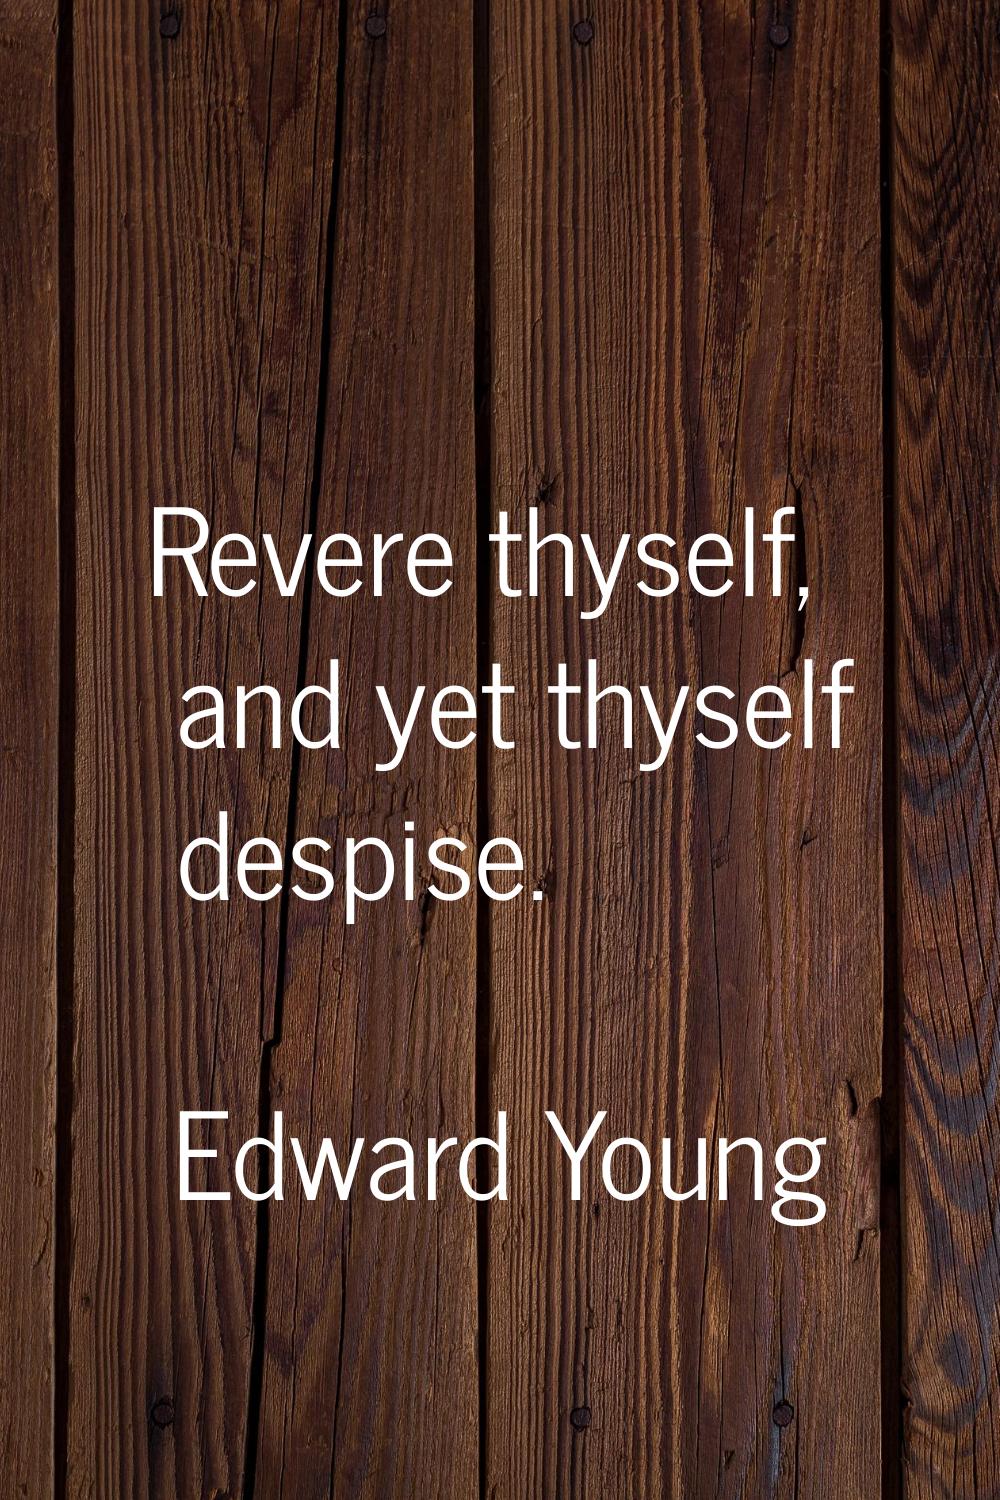 Revere thyself, and yet thyself despise.